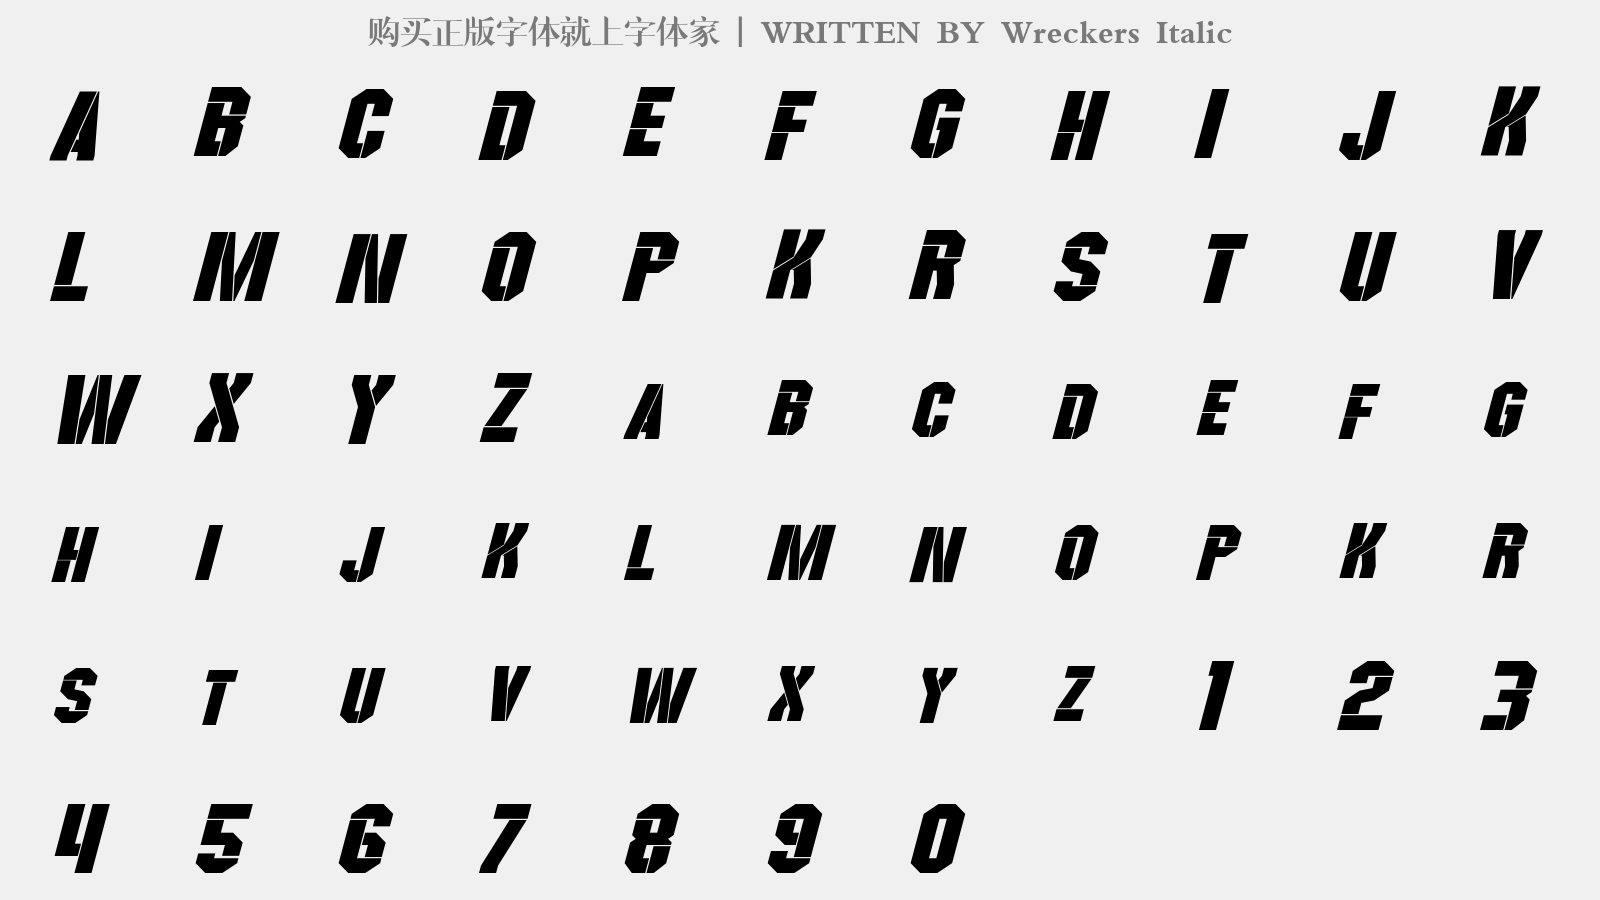 Wreckers Italic - 大写字母/小写字母/数字